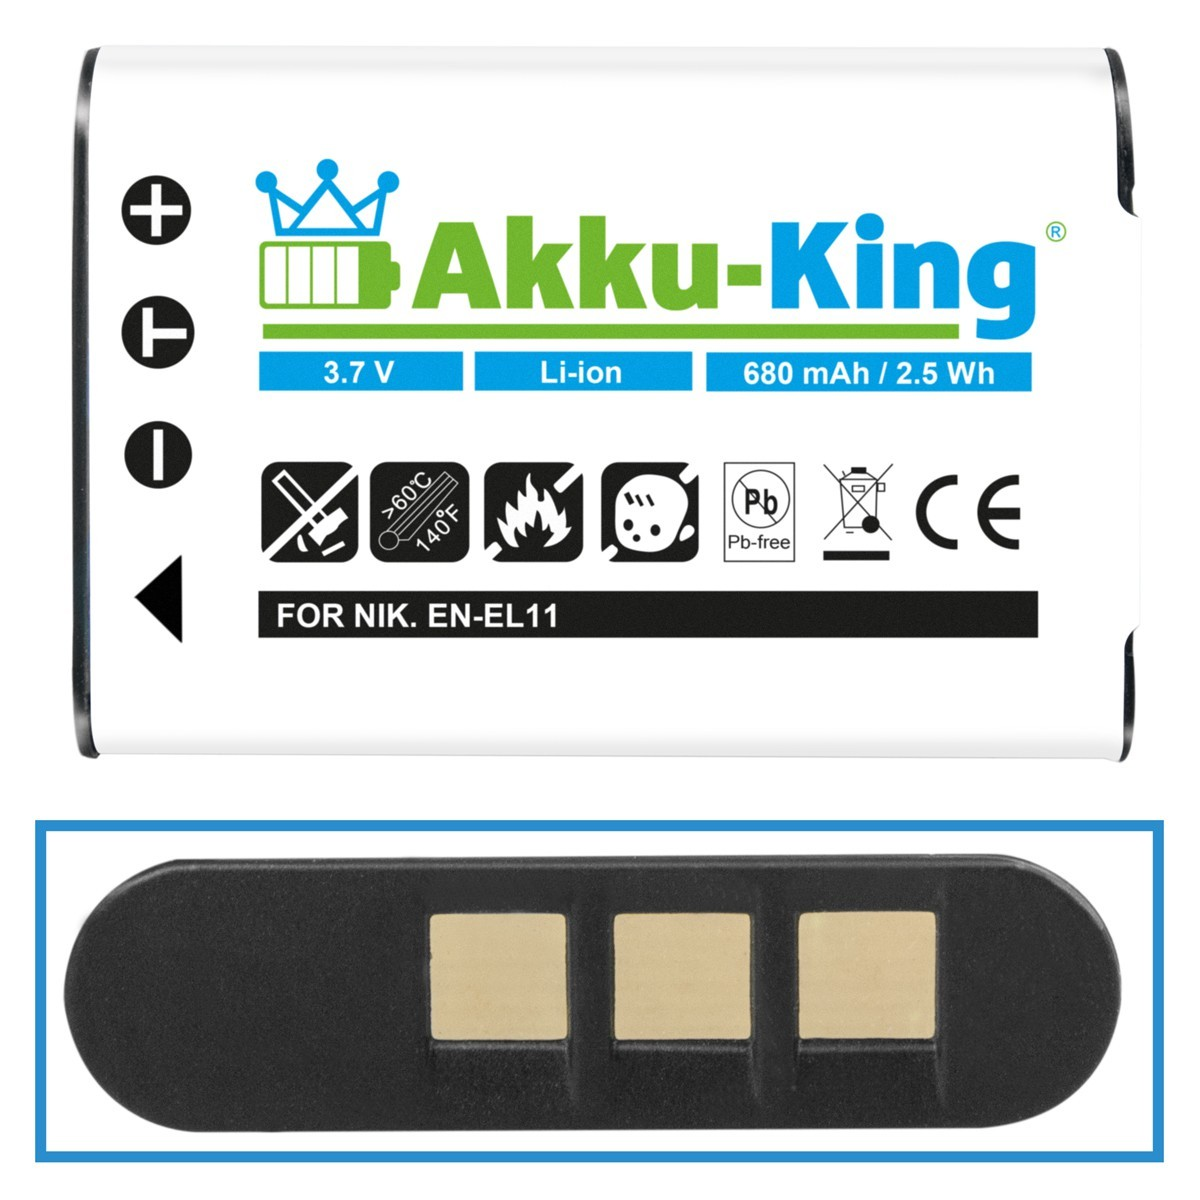 3.7 Volt, 680mAh EN-EL11 AKKU-KING mit Li-Ion Kamera-Akku, Akku Nikon kompatibel